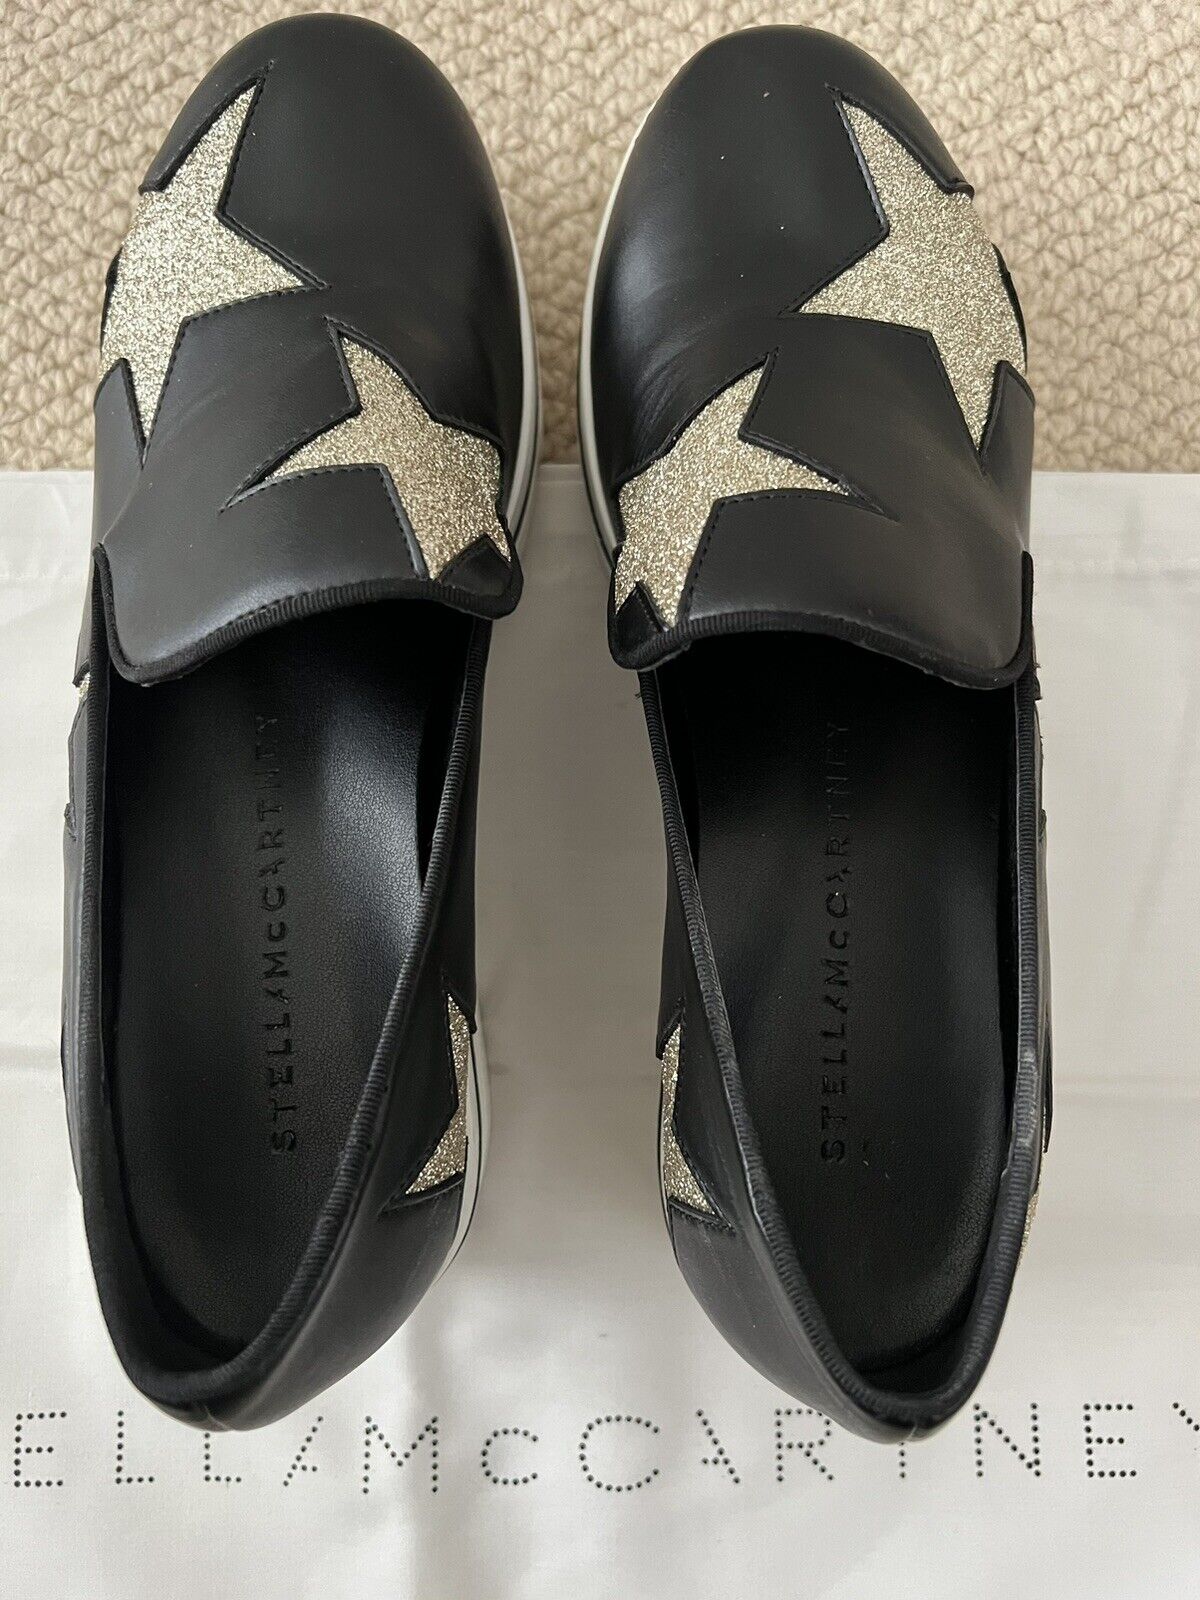 stella mccartney binx platform sneaker - image 6